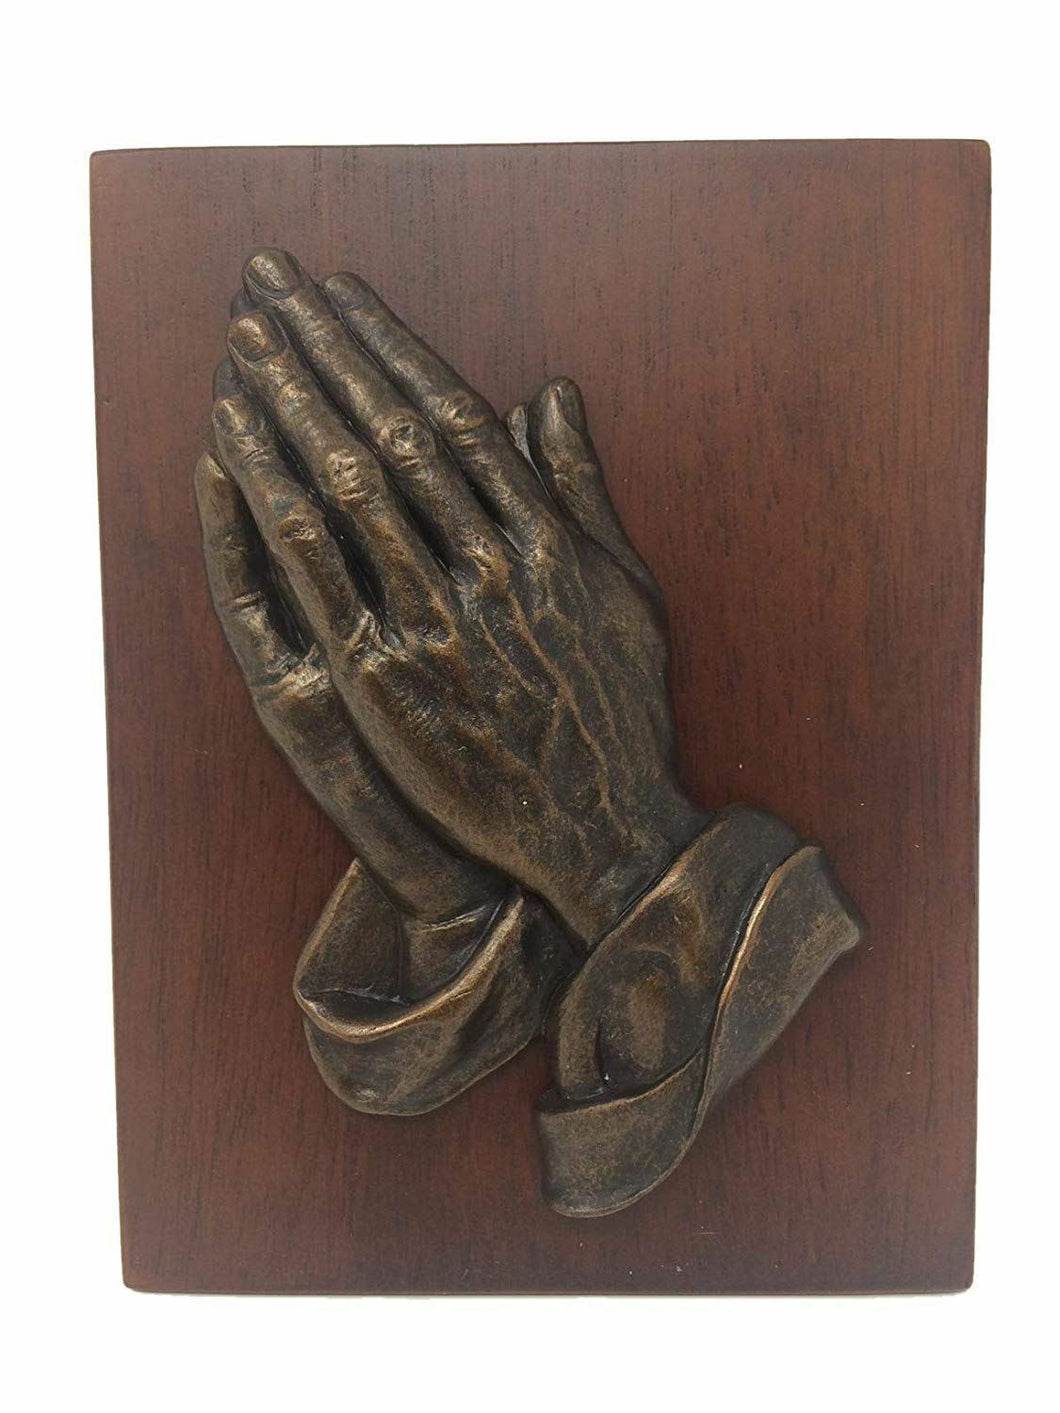 Praying Hands Wall Sculpture Religious Ornament Museum Replica Home Decoration